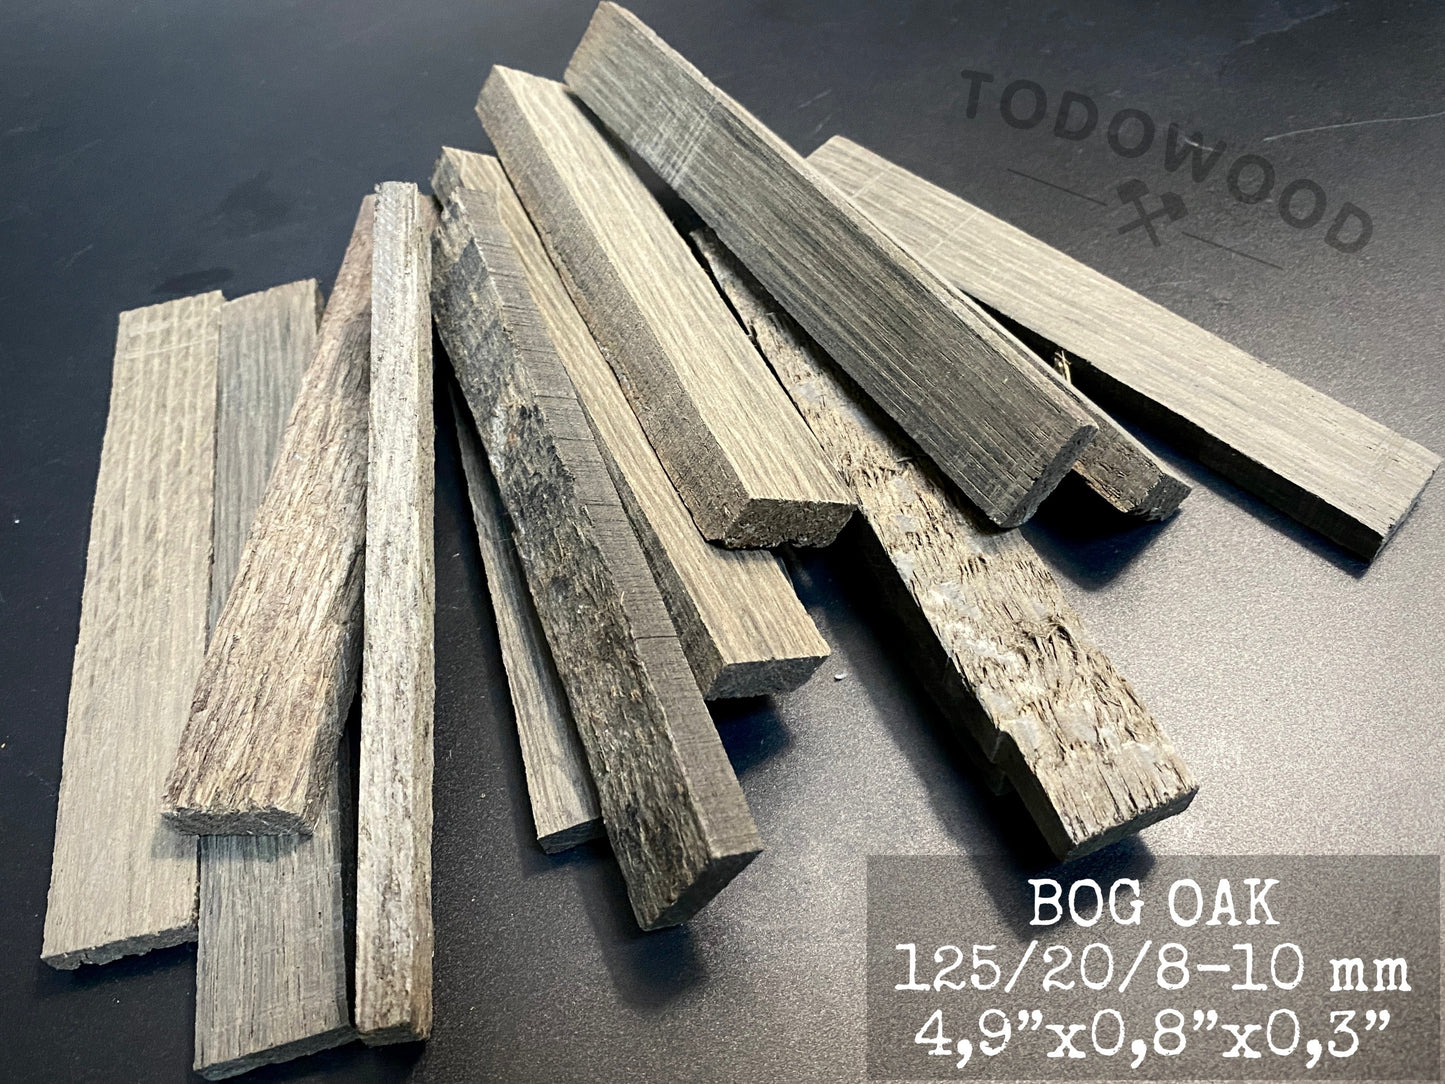 BOG OAK, Fumed Oak, Set 10 Small Blanks, Jewellery making, Casting Wood. #10.BO.001